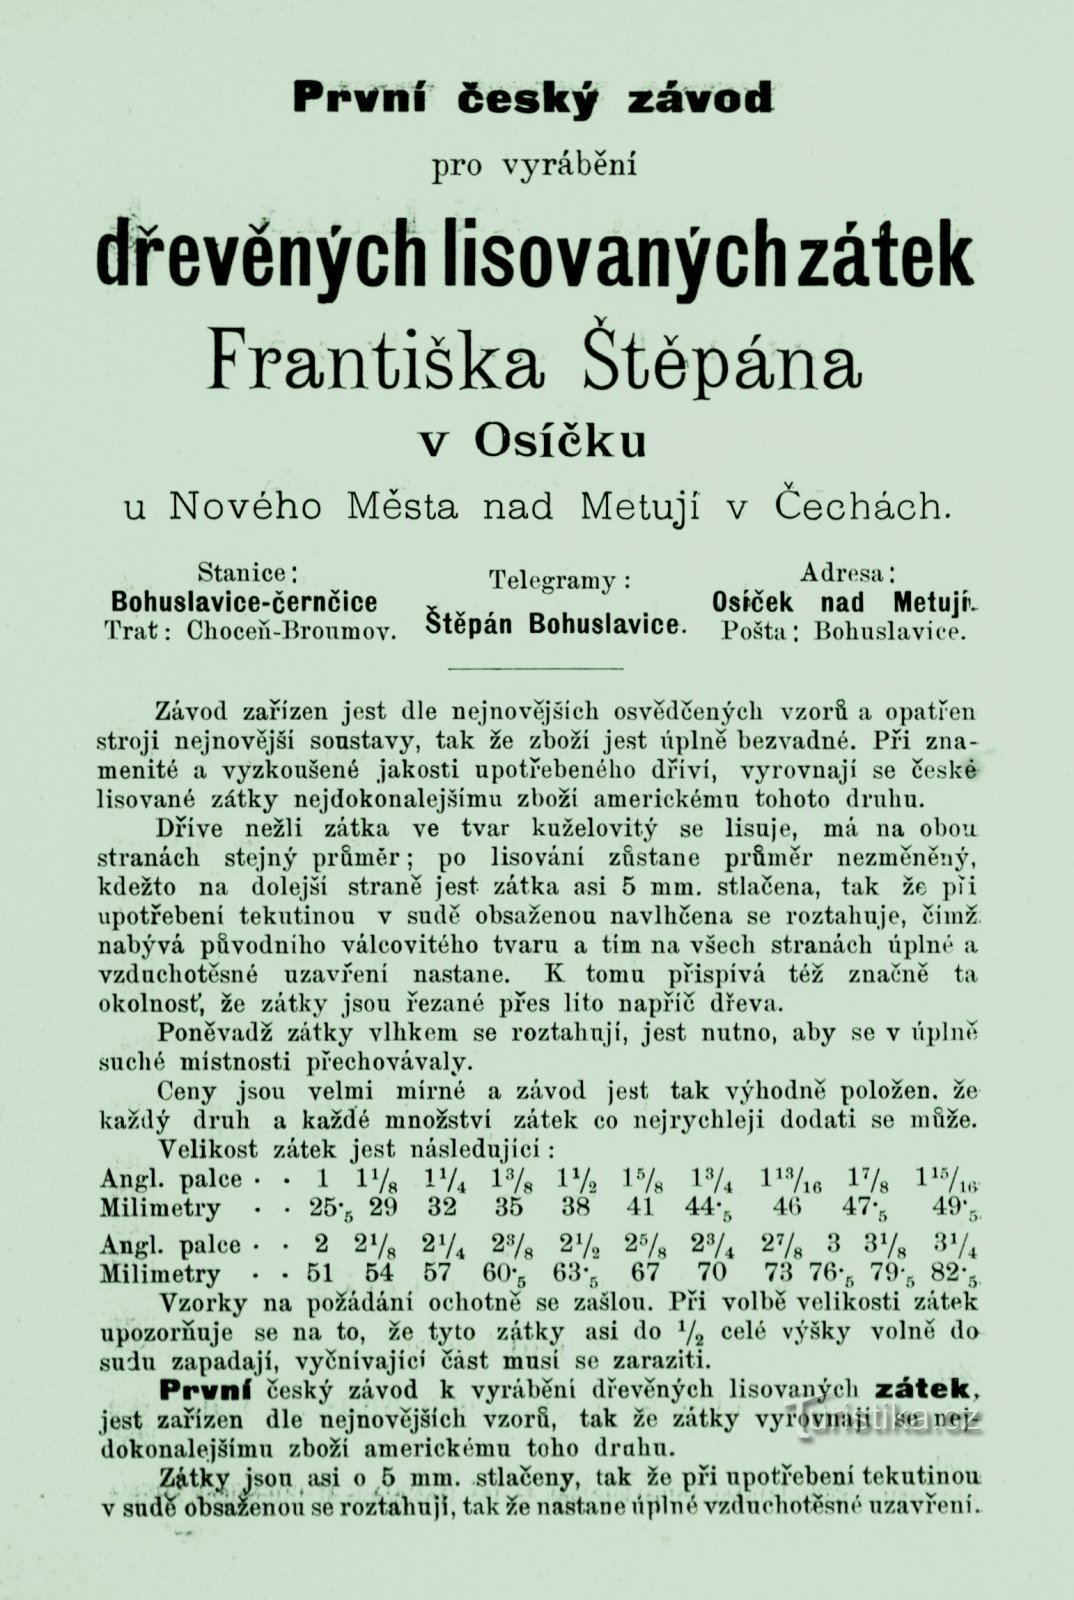 Period advertisement of miller František Štěpán from 1893